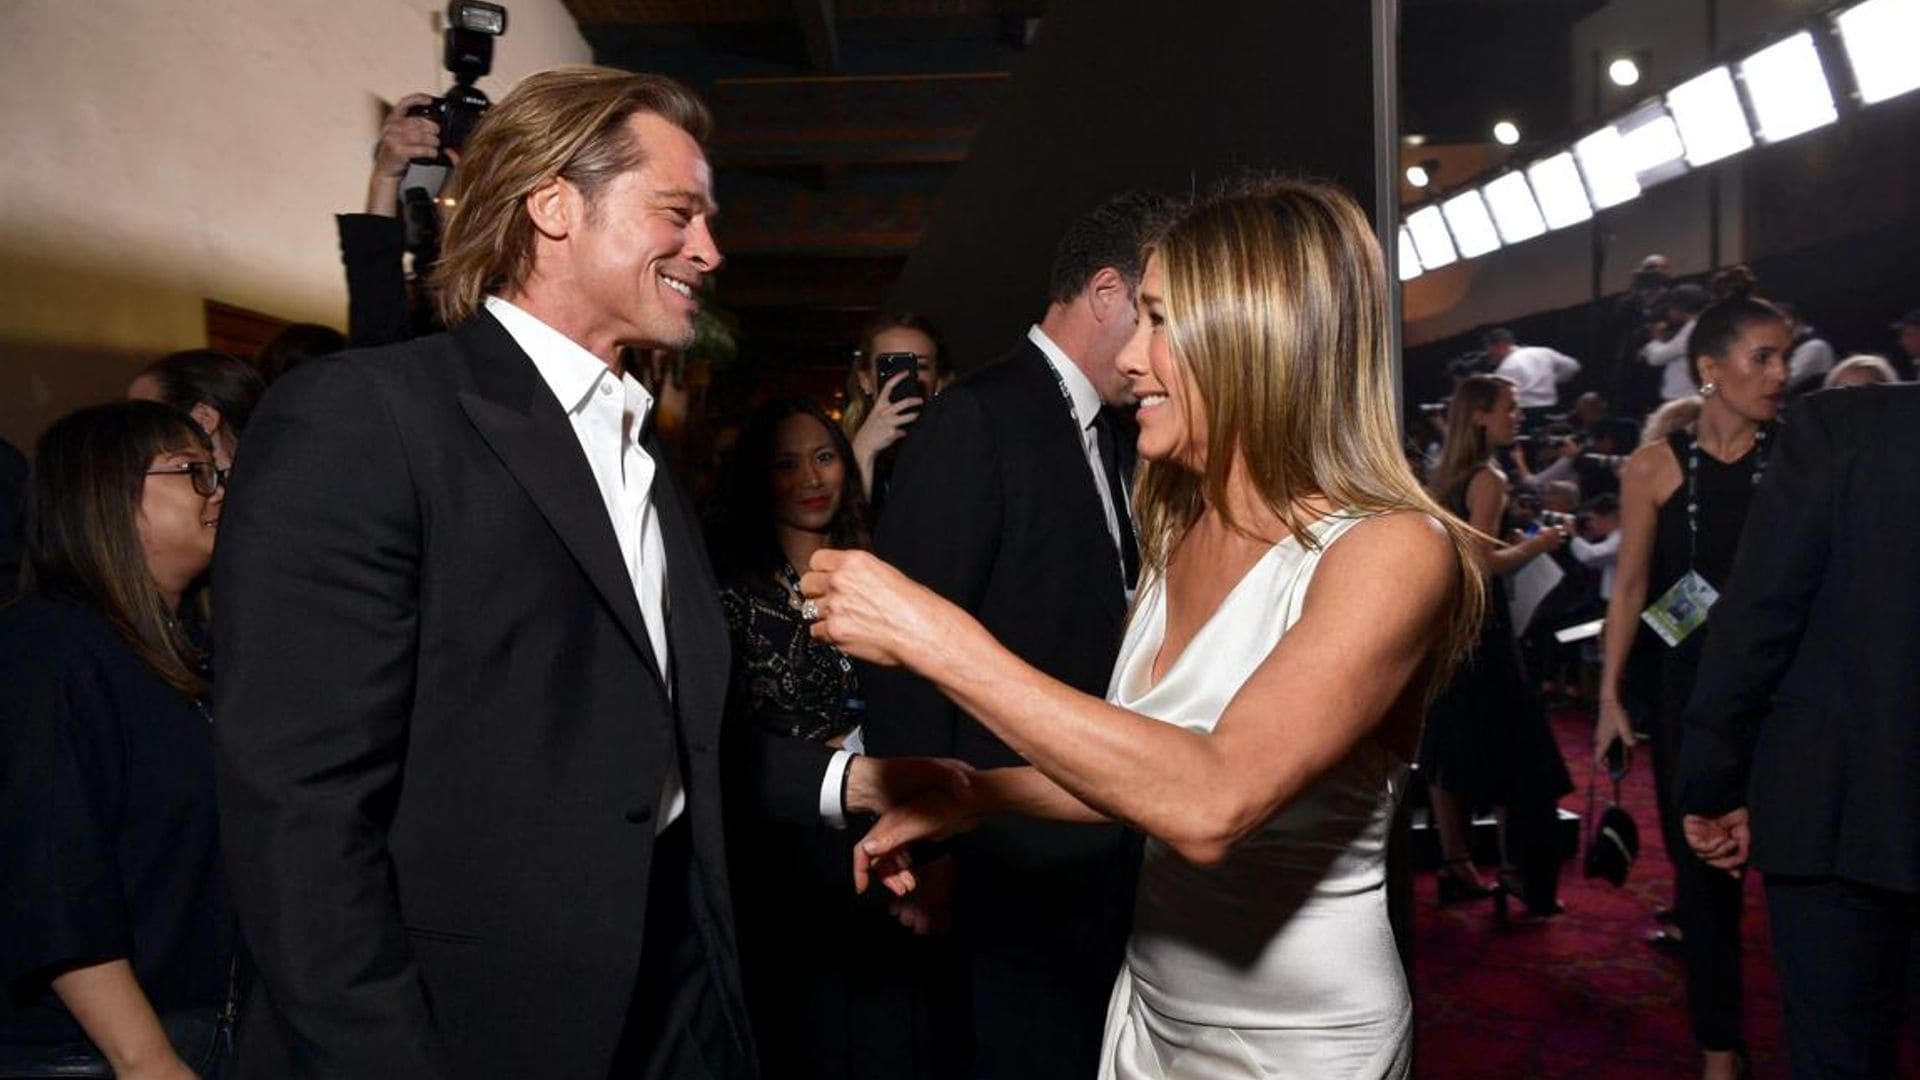 Brad Pitt and Jennifer Aniston - See all the photos of their long-awaited reunion